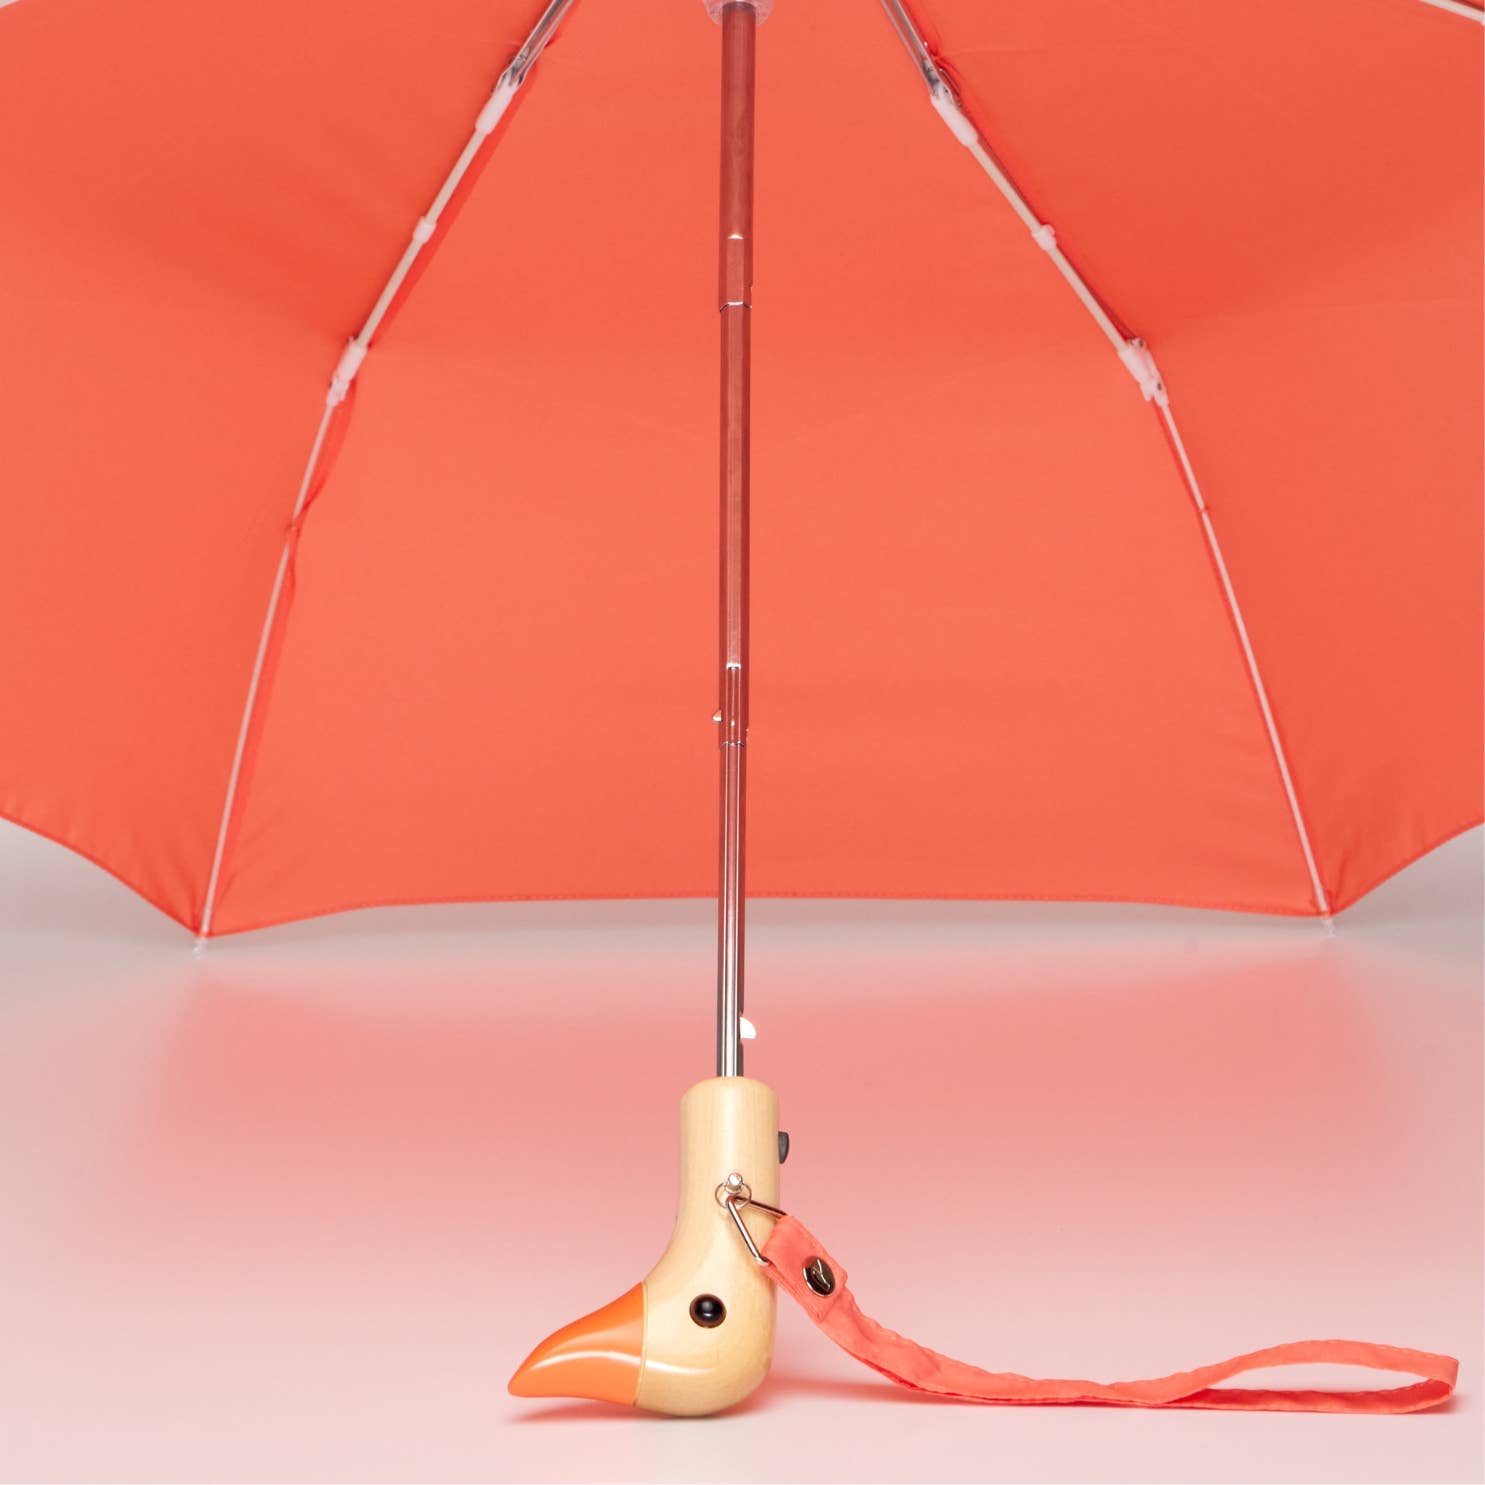 Duck Umbrella, Peach